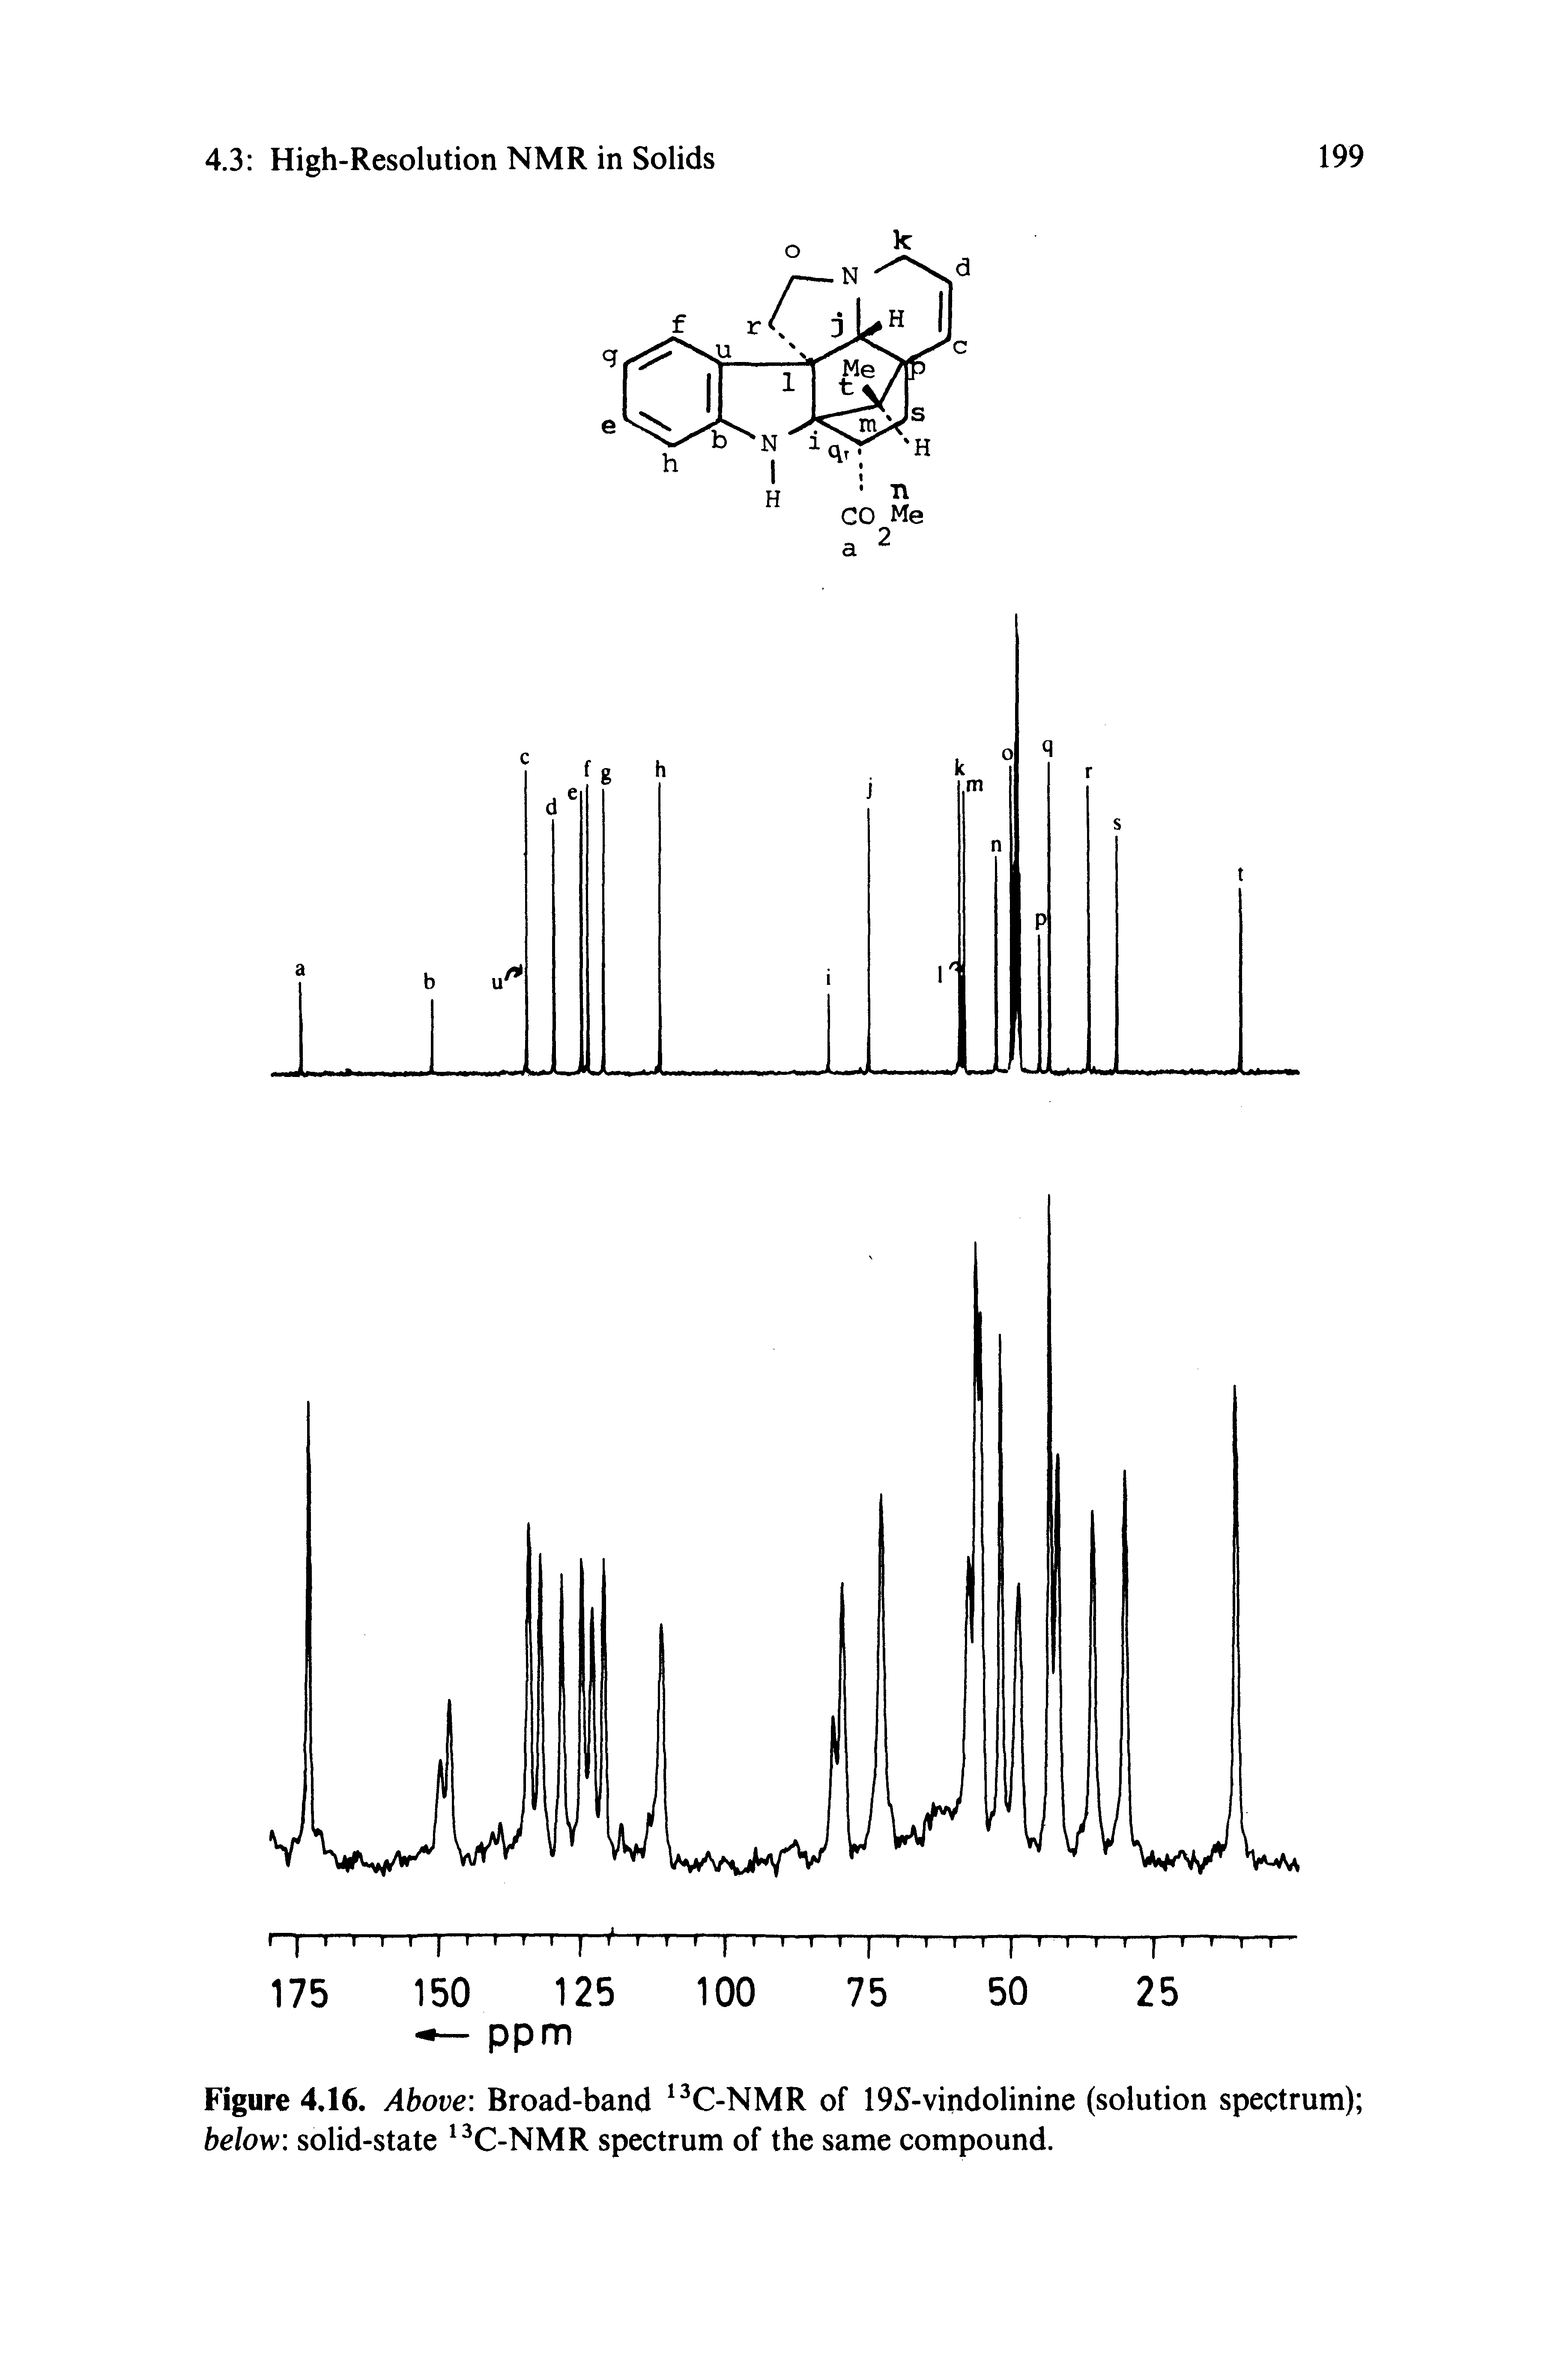 Figure 4.16. Above Broad-band C-NMR of 19S -vindolinine (solution spectrum) below solid-state C-NMR spectrum of the same compound.